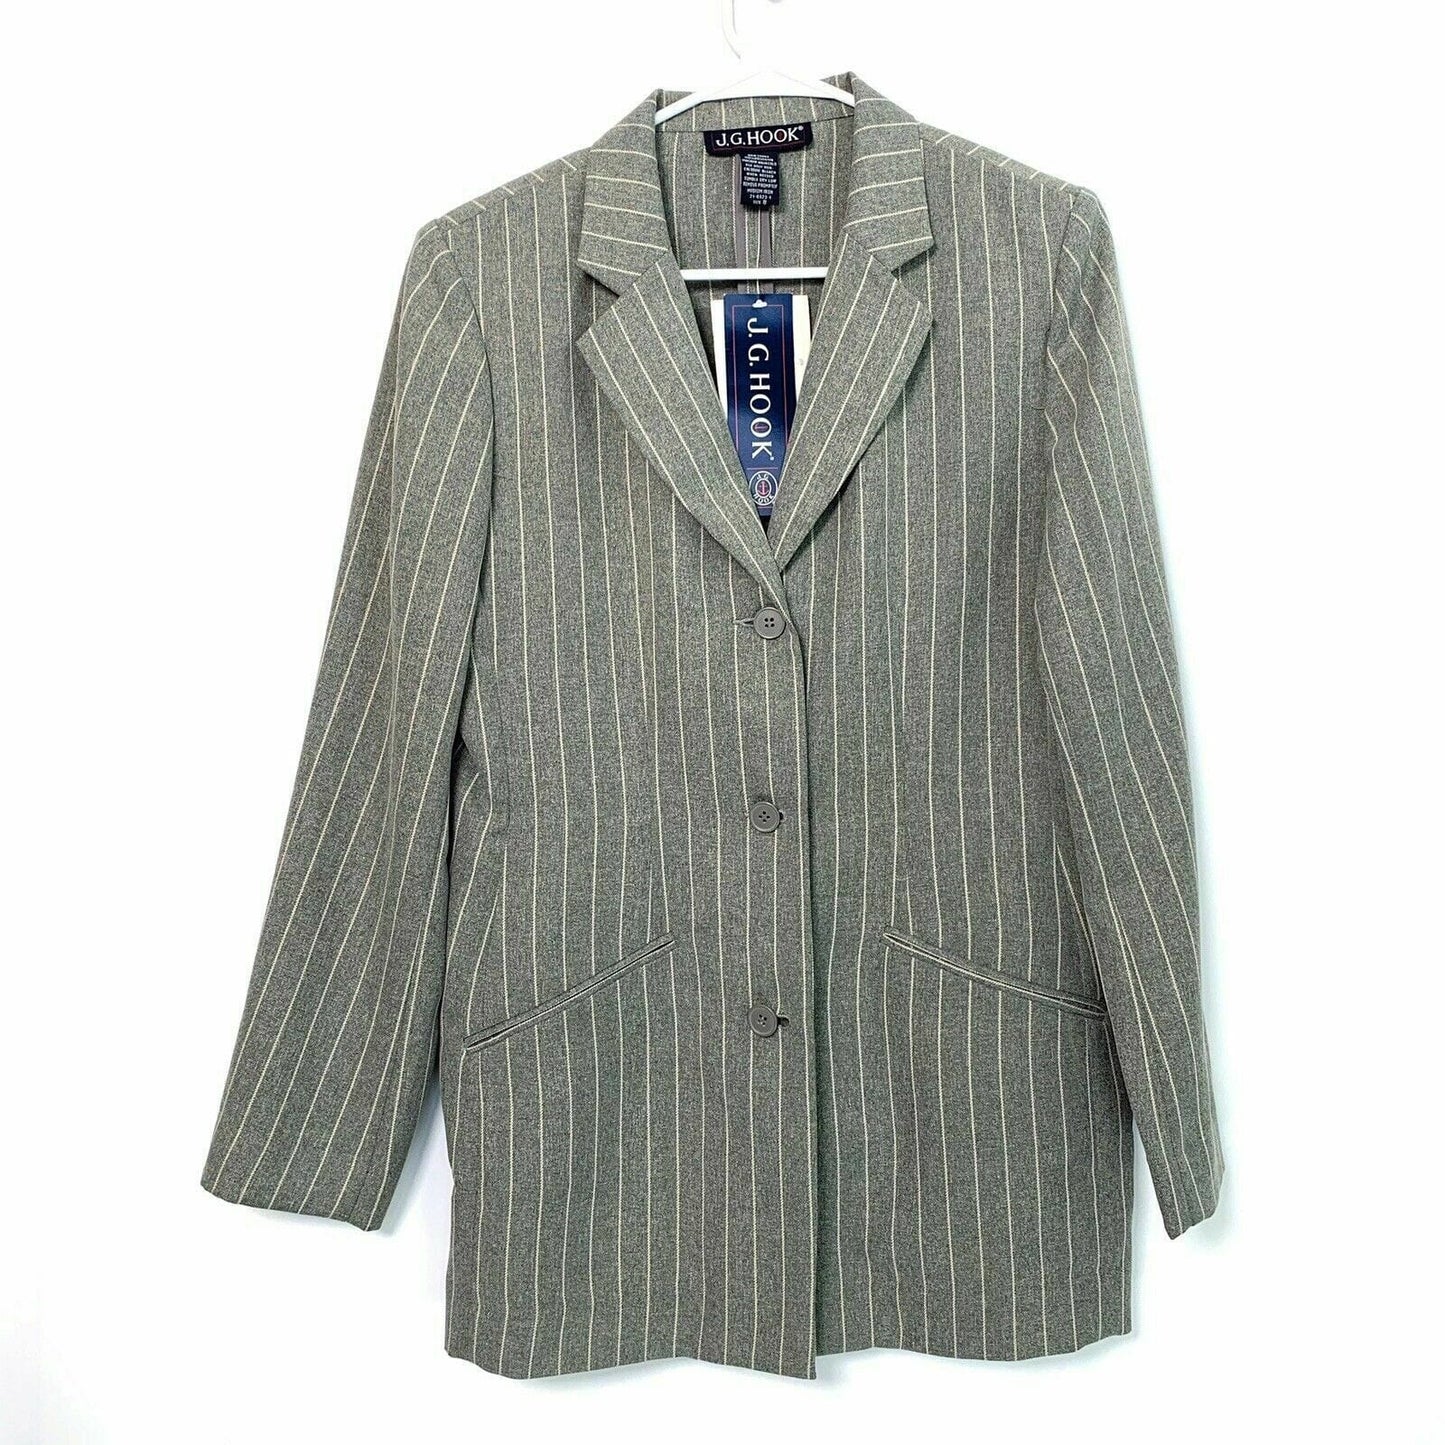 JG HOOK Womens Size 8 Gray Striped Blazer Jacket Lined Suit 3 Button